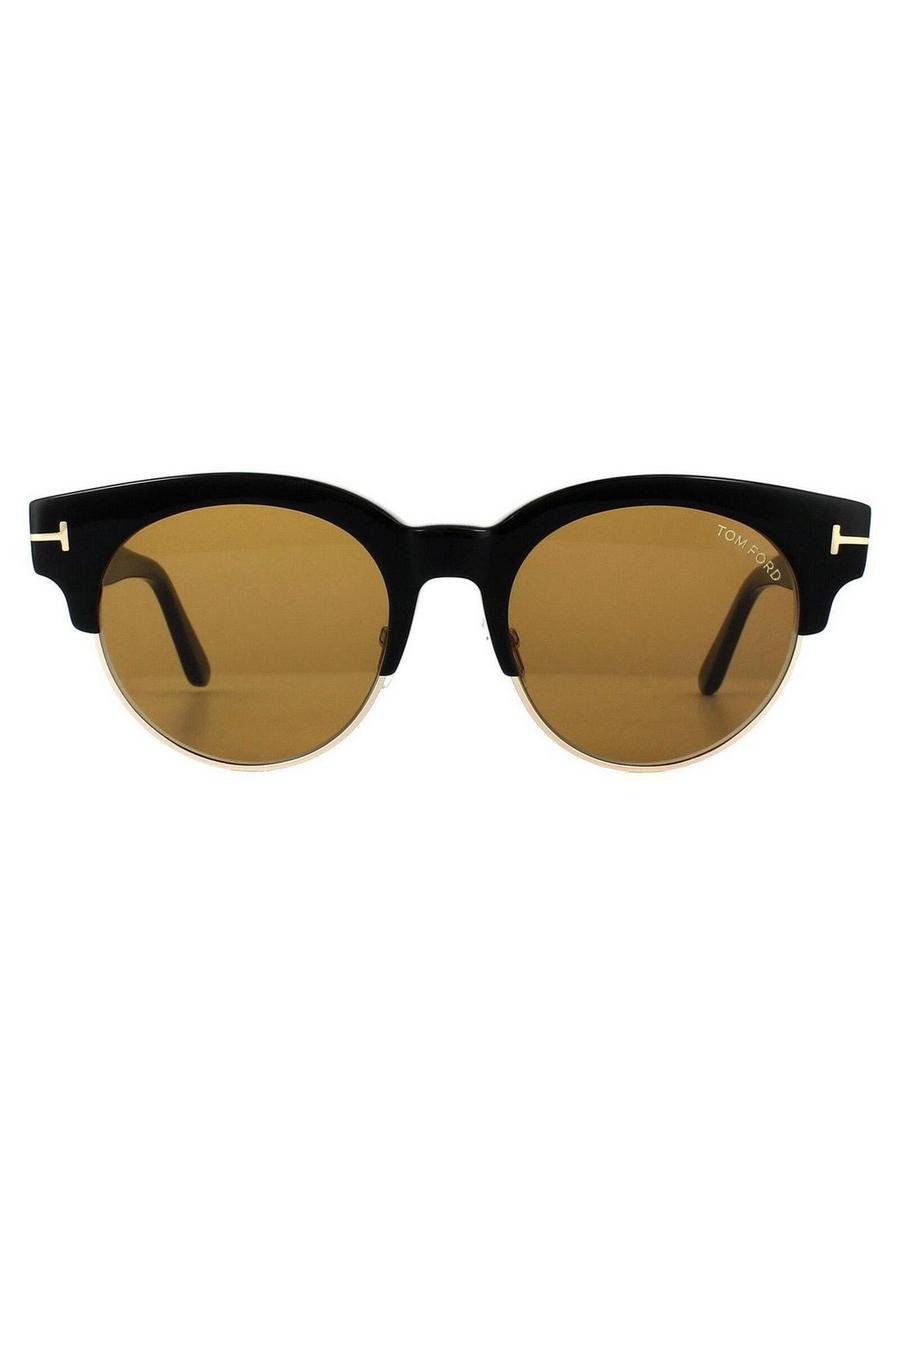 Round Shiny Black Brown Sunglasses